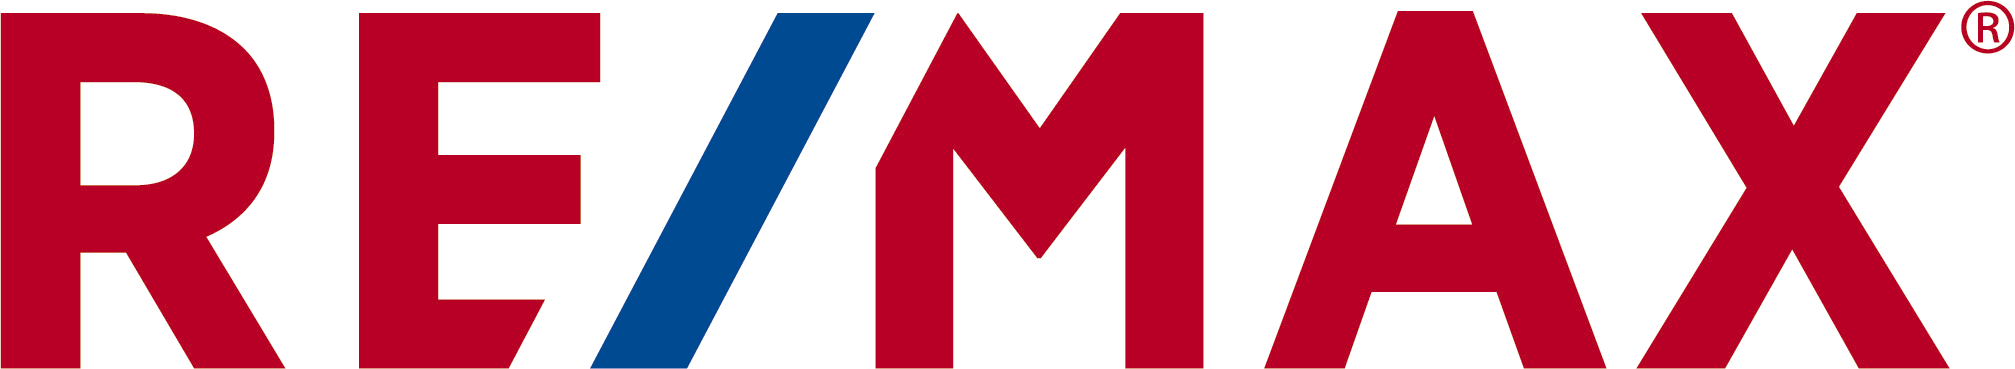 RE/MAX CMYK logo